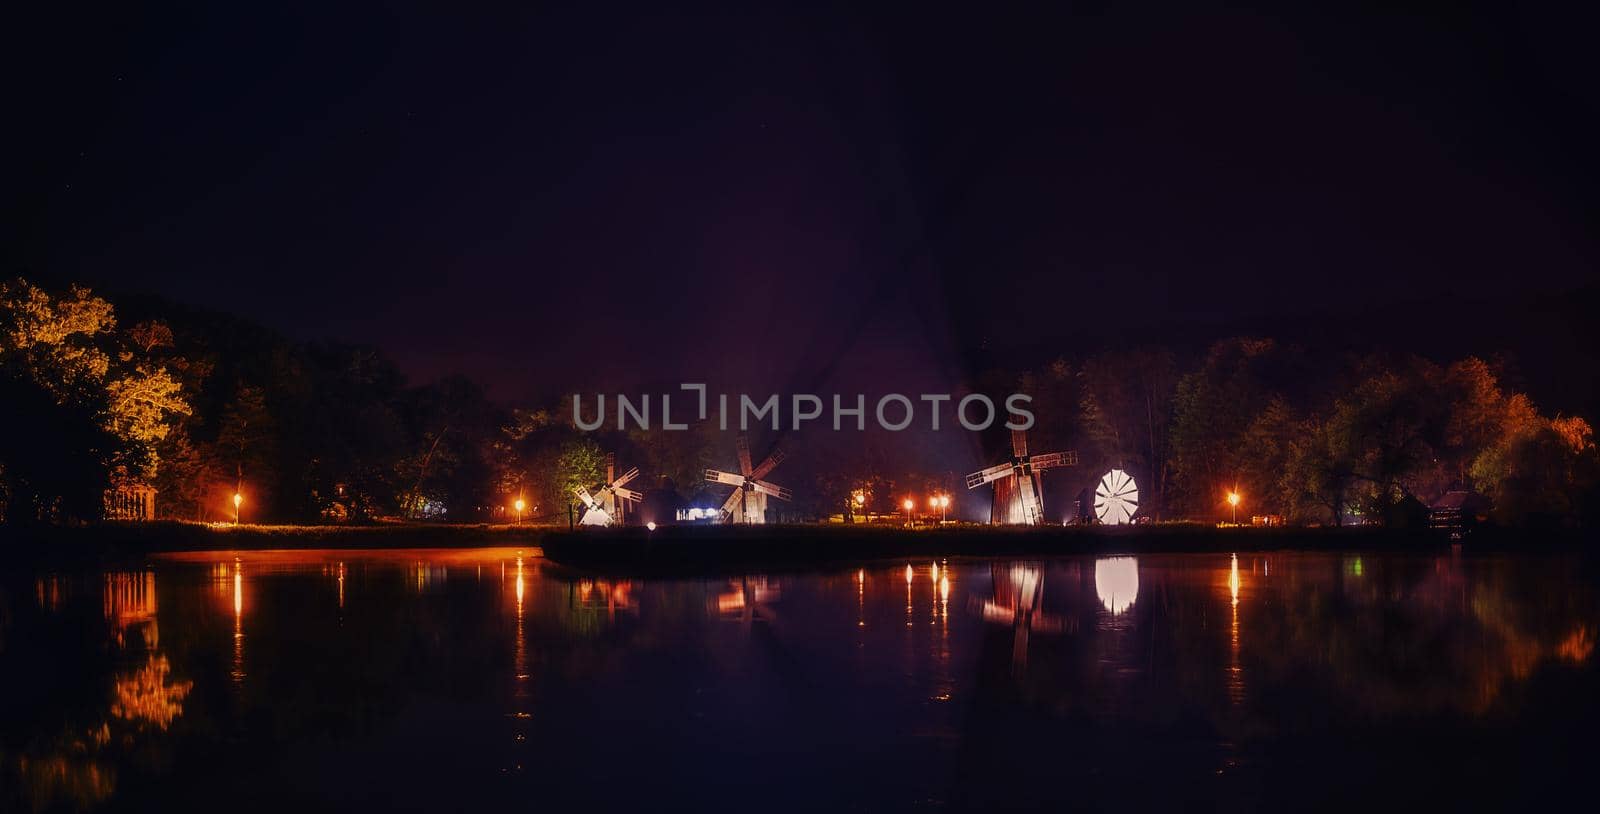 Windmills on lake by night by Roberto